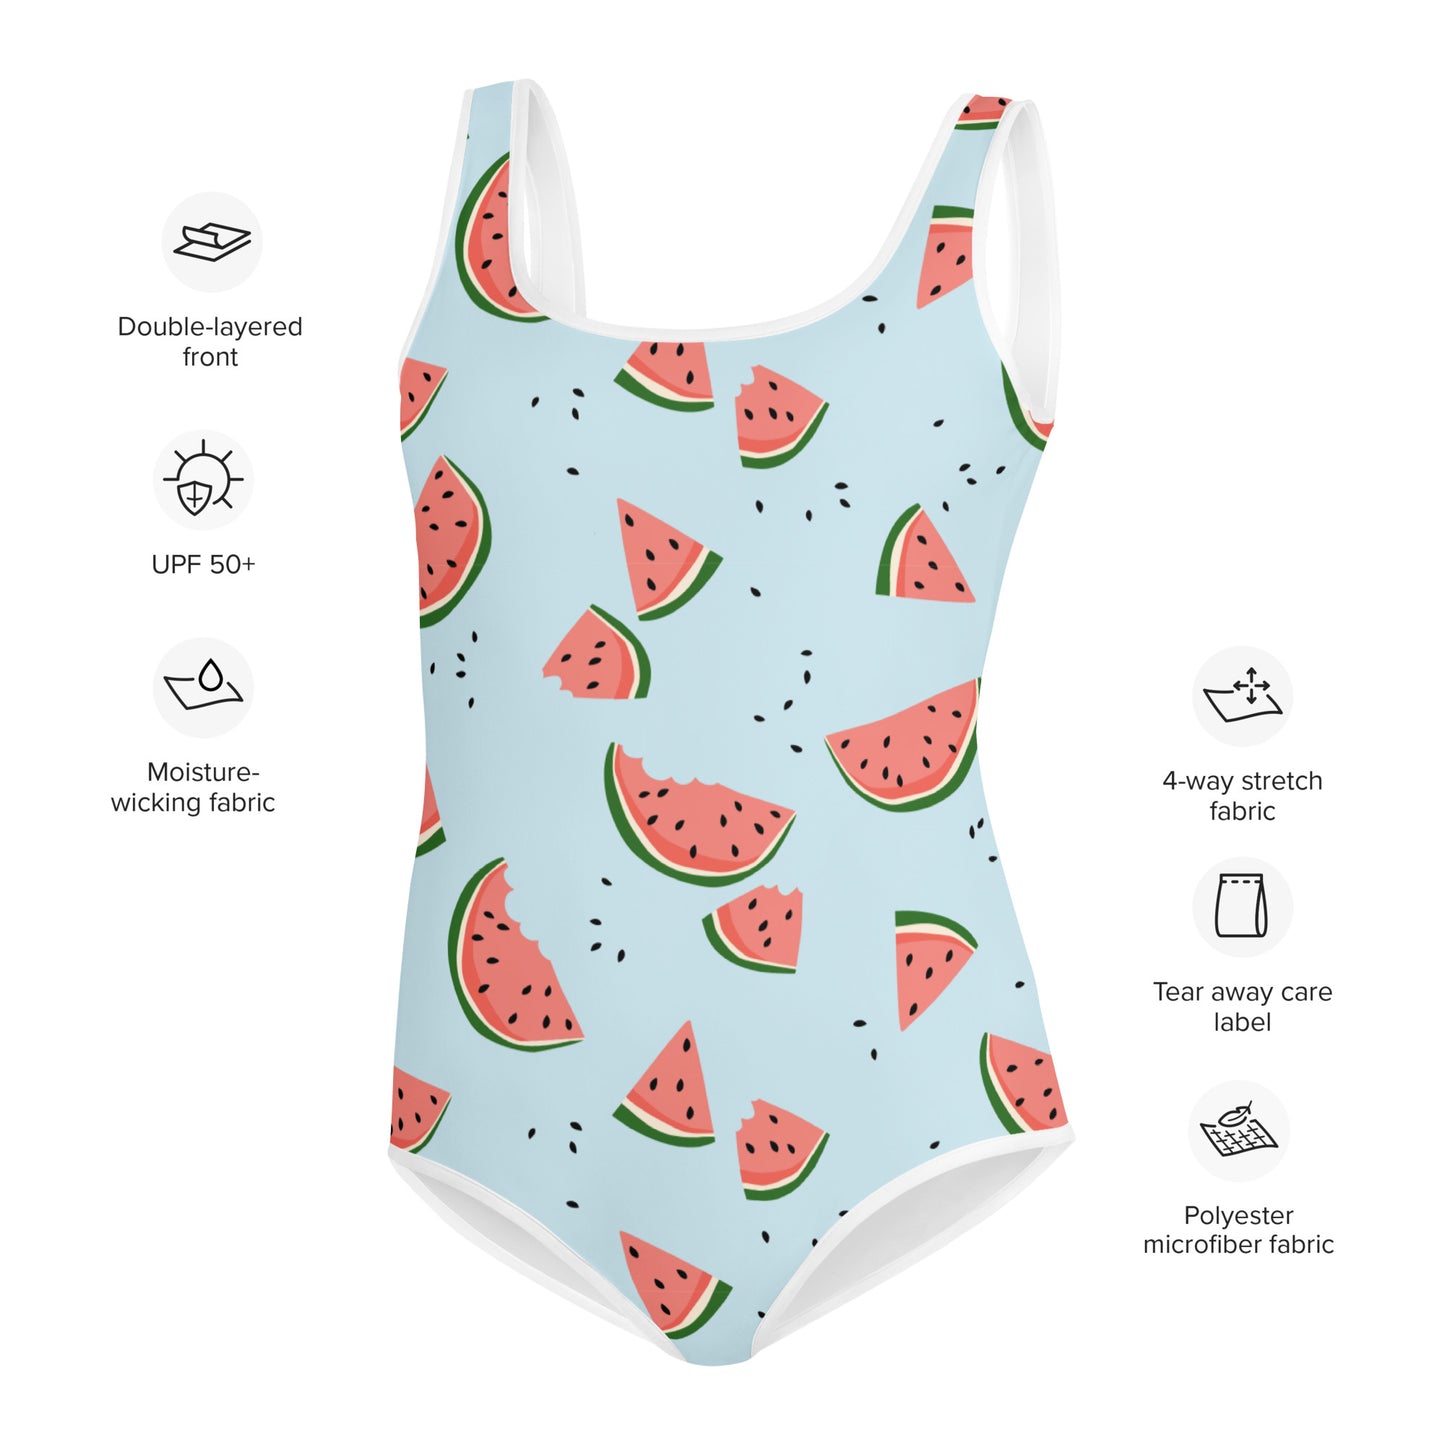 Watermelon Girls Swimsuits (8 - 20), Blue Summer Fruit Cute Kids Jr Junior Tween Teen One Piece Bathing Suit Young Swimwear Starcove Fashion